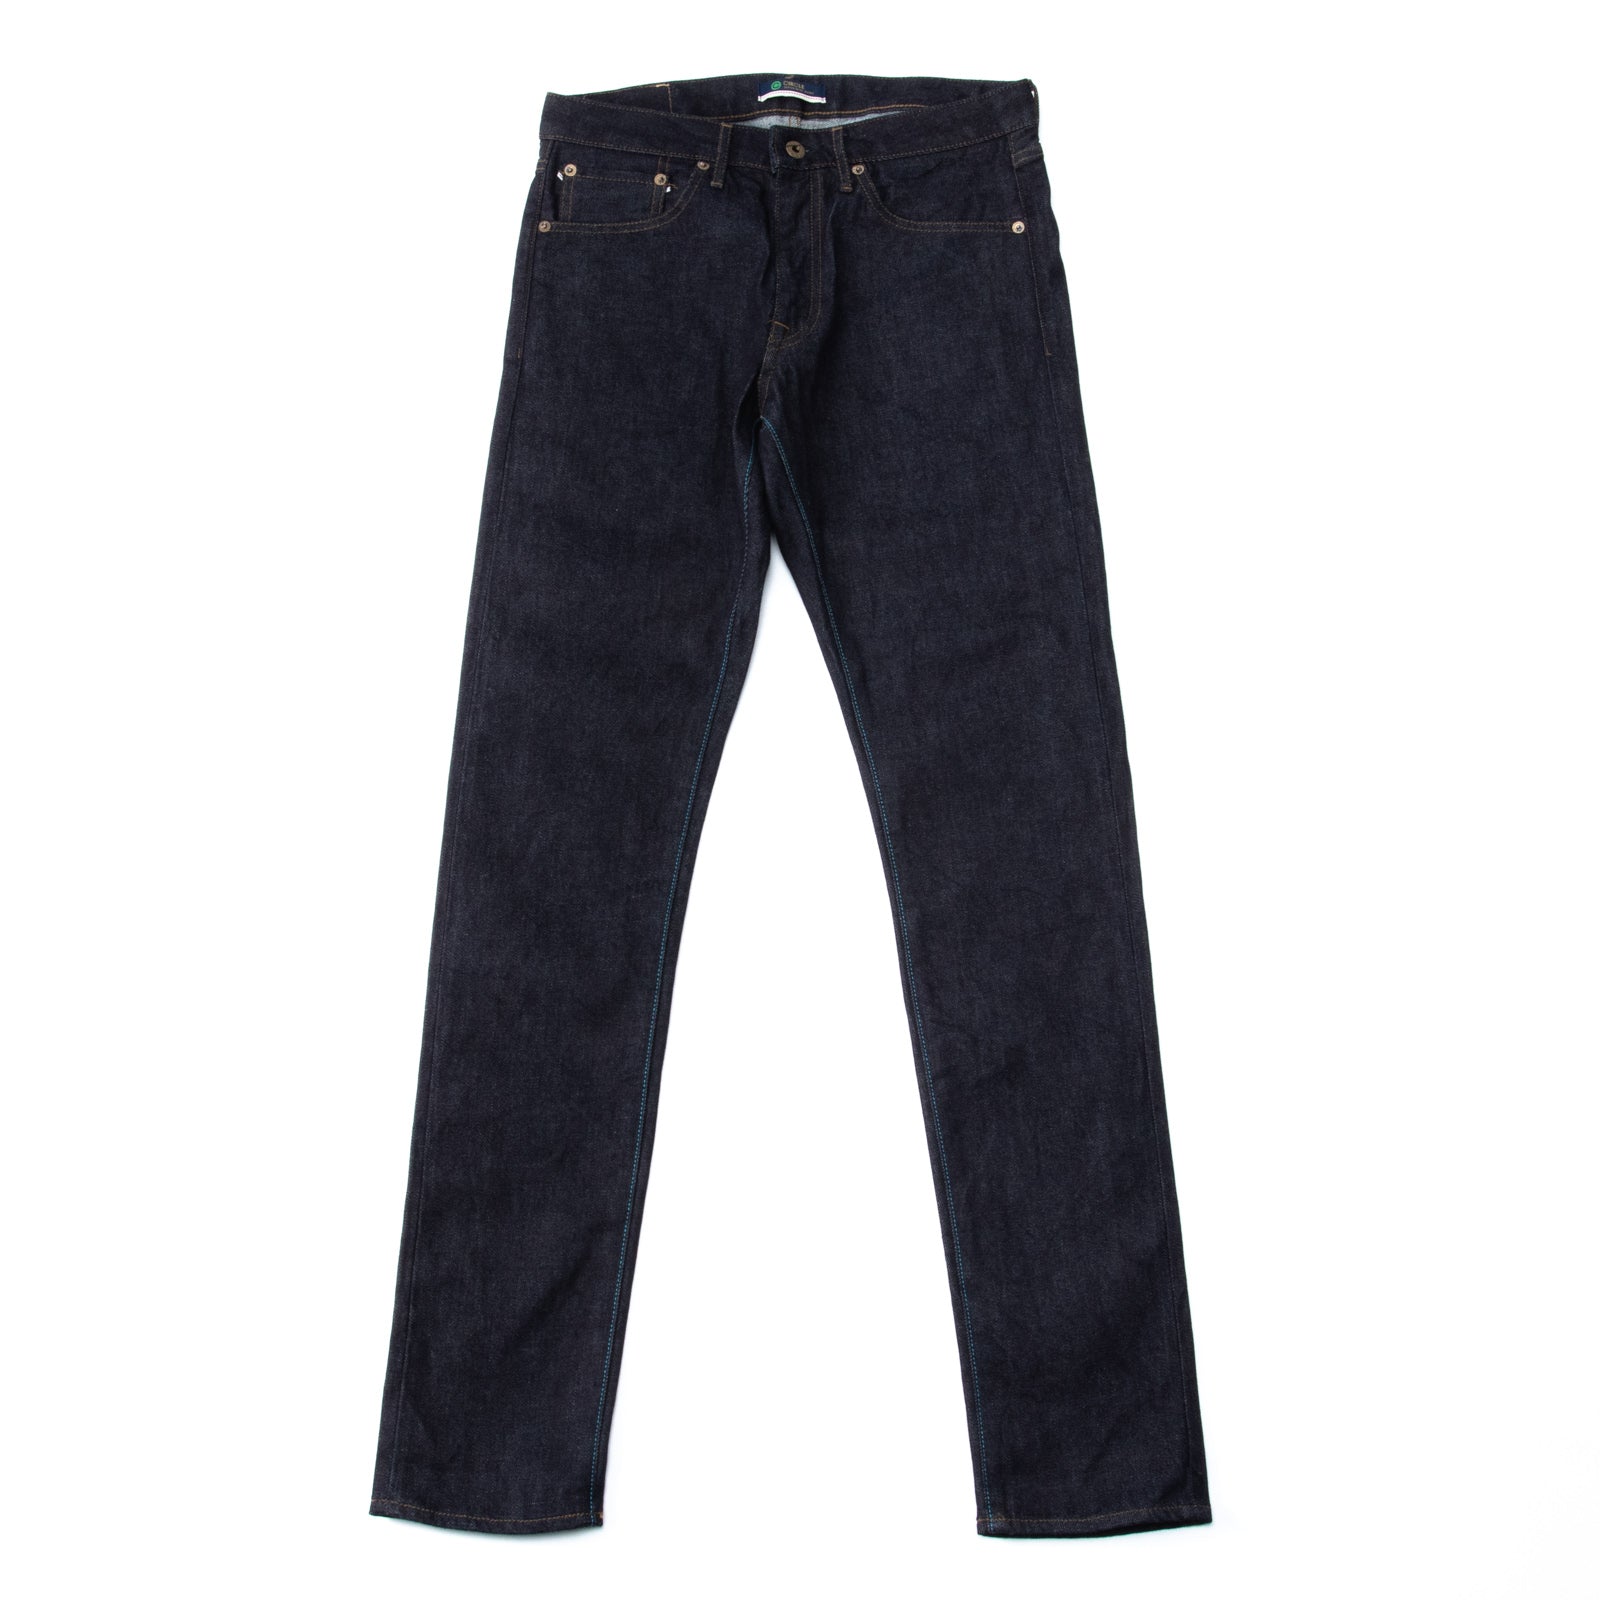 Blue Jeans Circle Tapered Fit Selvedge 12.5oz Indigo Stretch - Standard & Strange